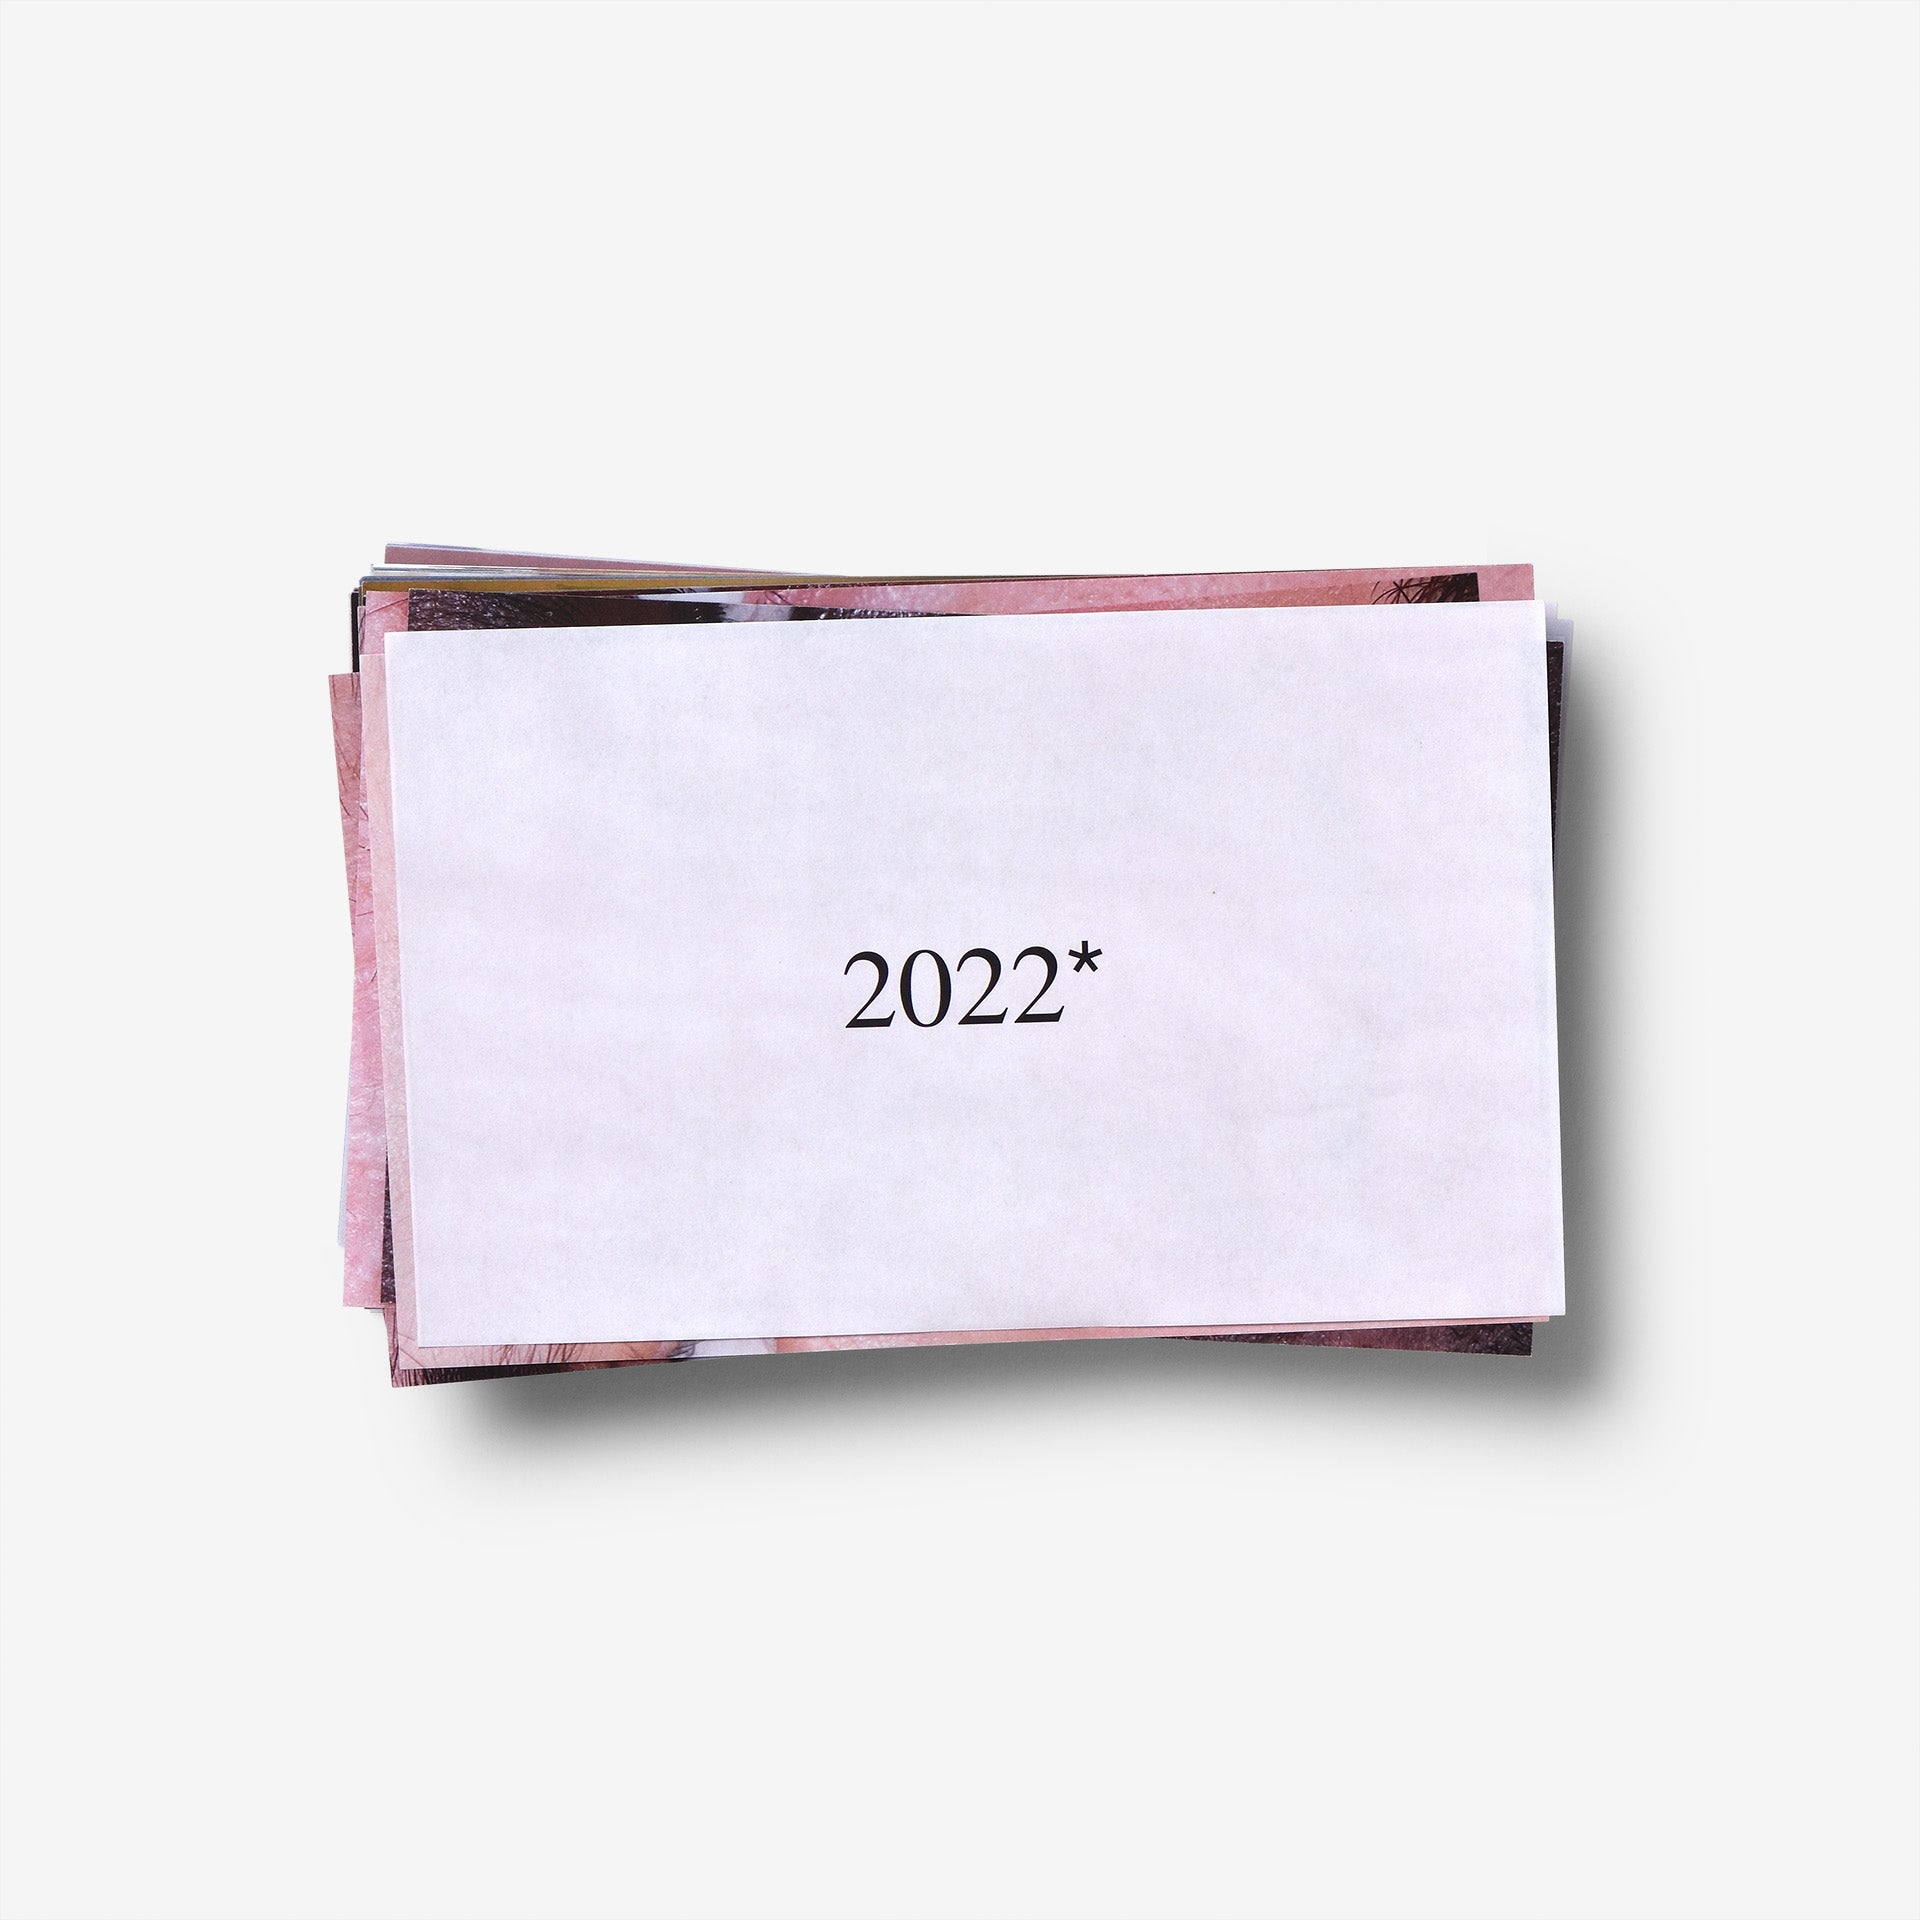 2022* Magazine - Borja Llobregat Cover